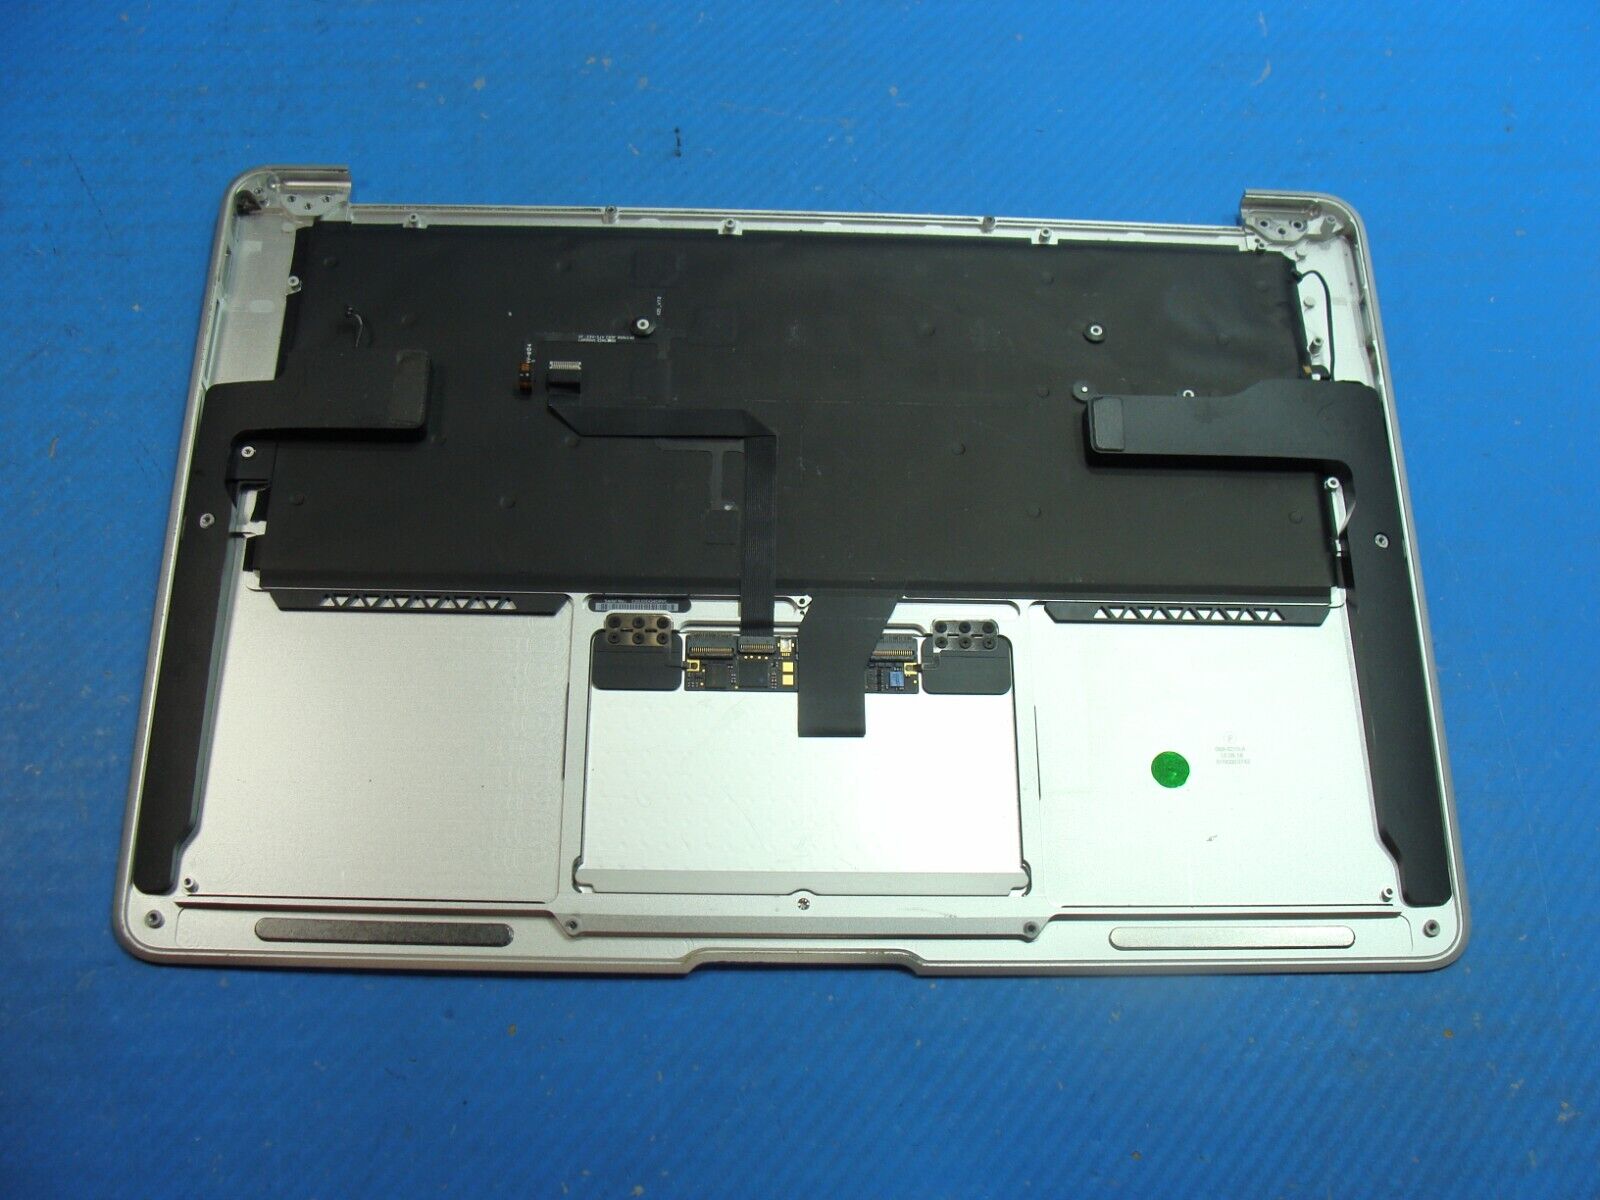 MacBook Air 13 A1466 Mid 2012 MD231LL/A Top Case w/Keyboard TrackPad 661-6635